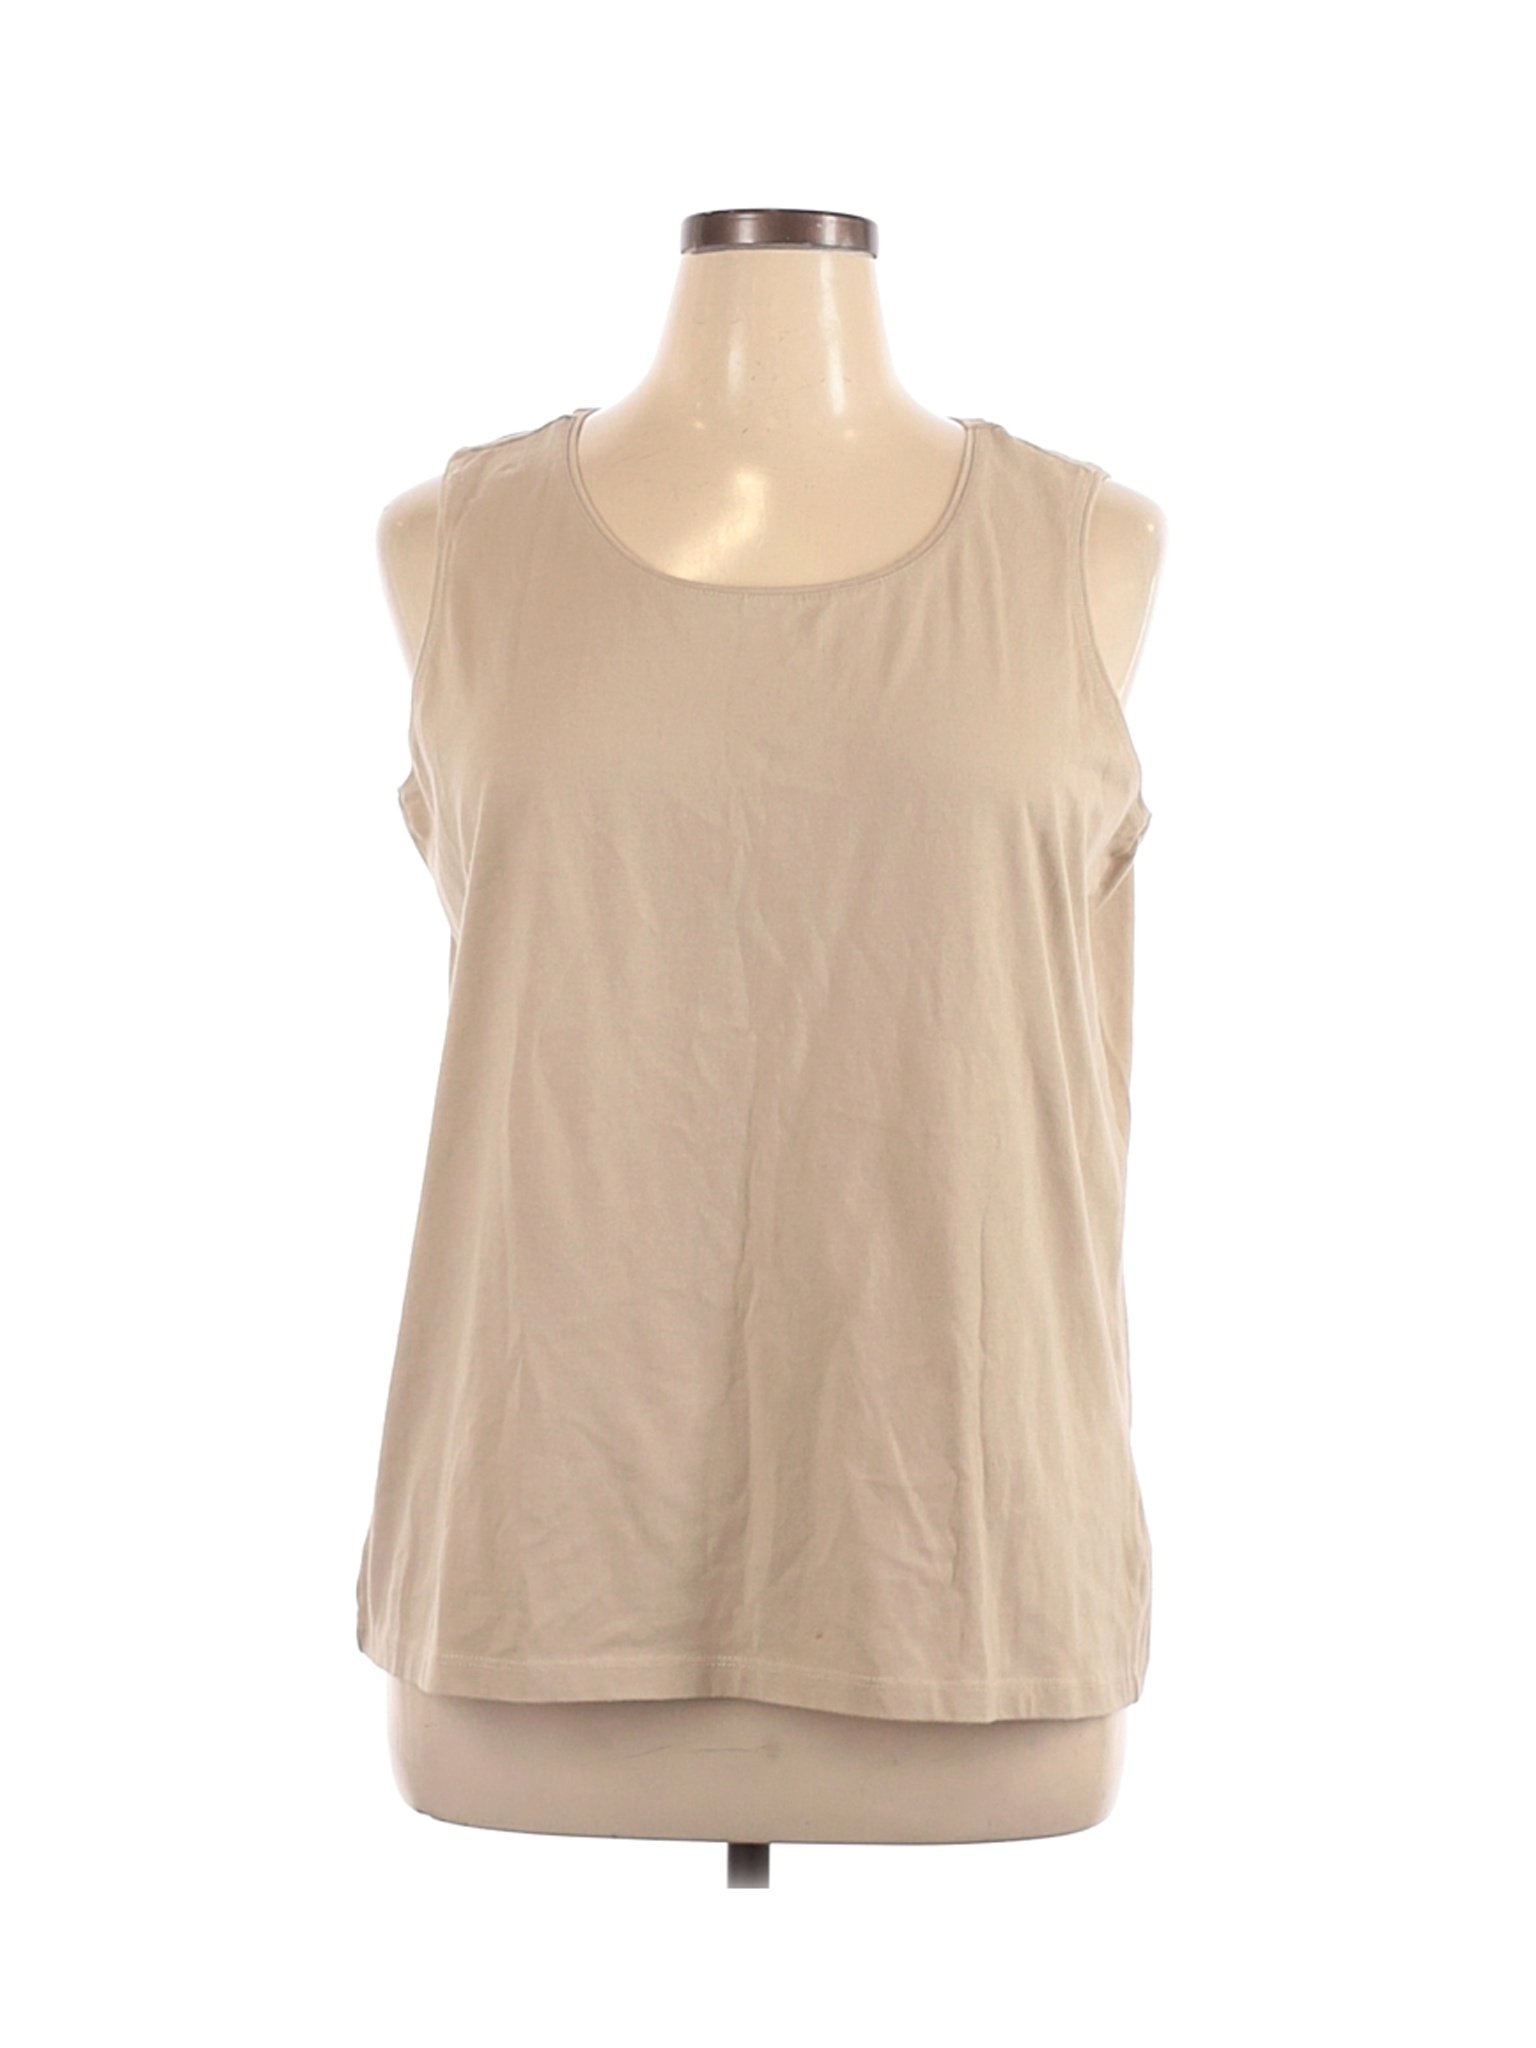 Coral Bay Women Brown Sleeveless T-Shirt 1X Plus | eBay